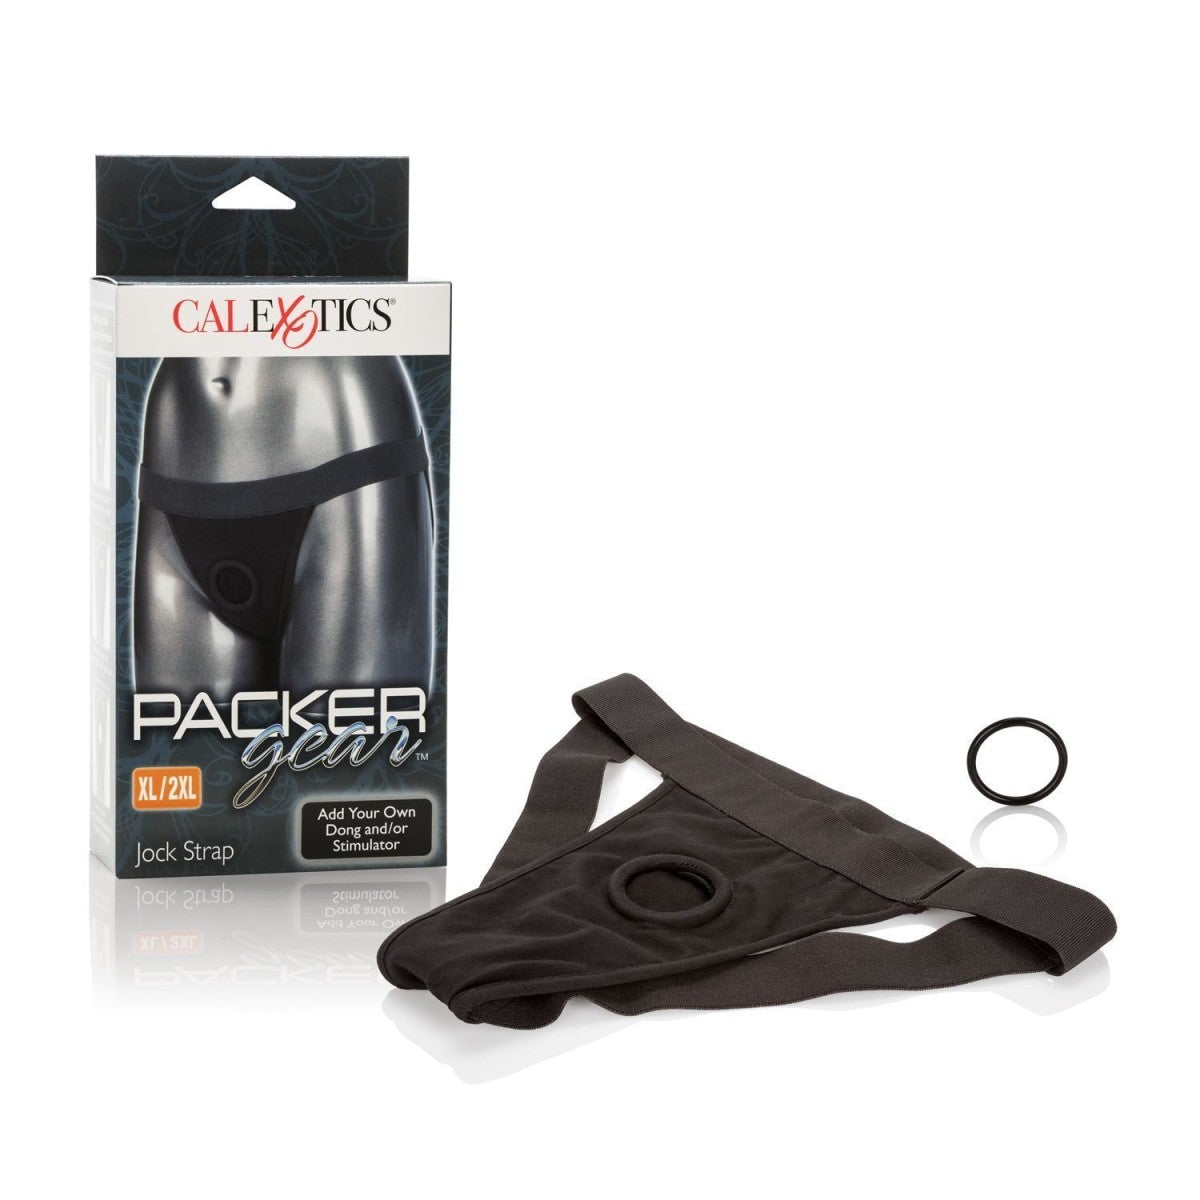 Packer Gear Jock Strap Xl-2xl Intimates Adult Boutique